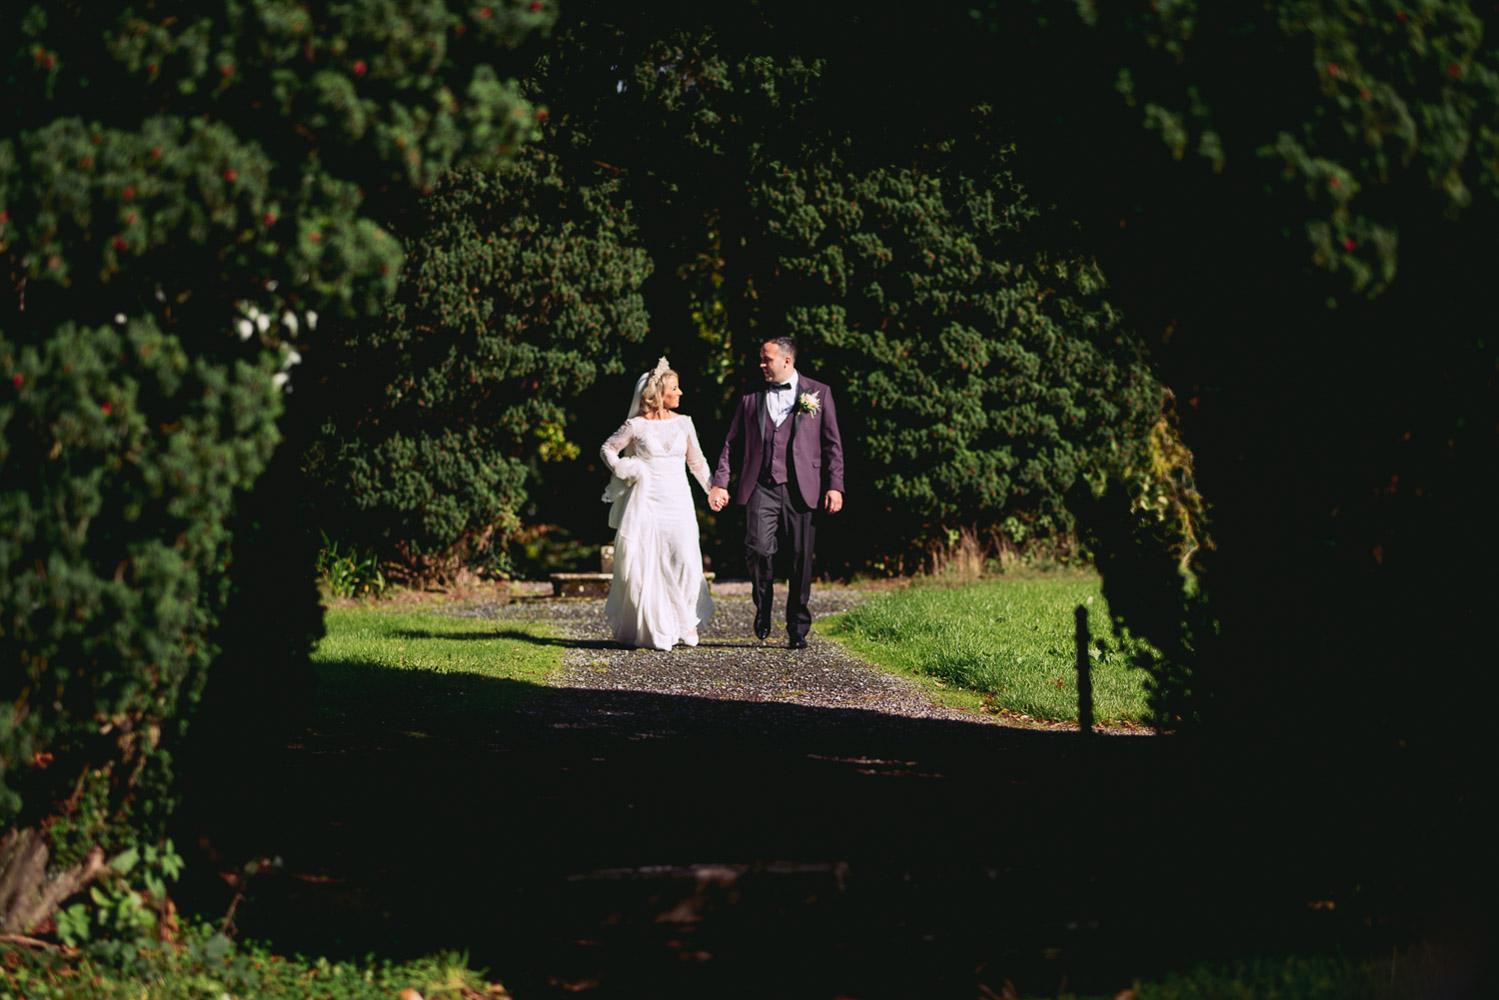 Lauren & Liam's Wedding - Four Seasons Hotel, Monaghan